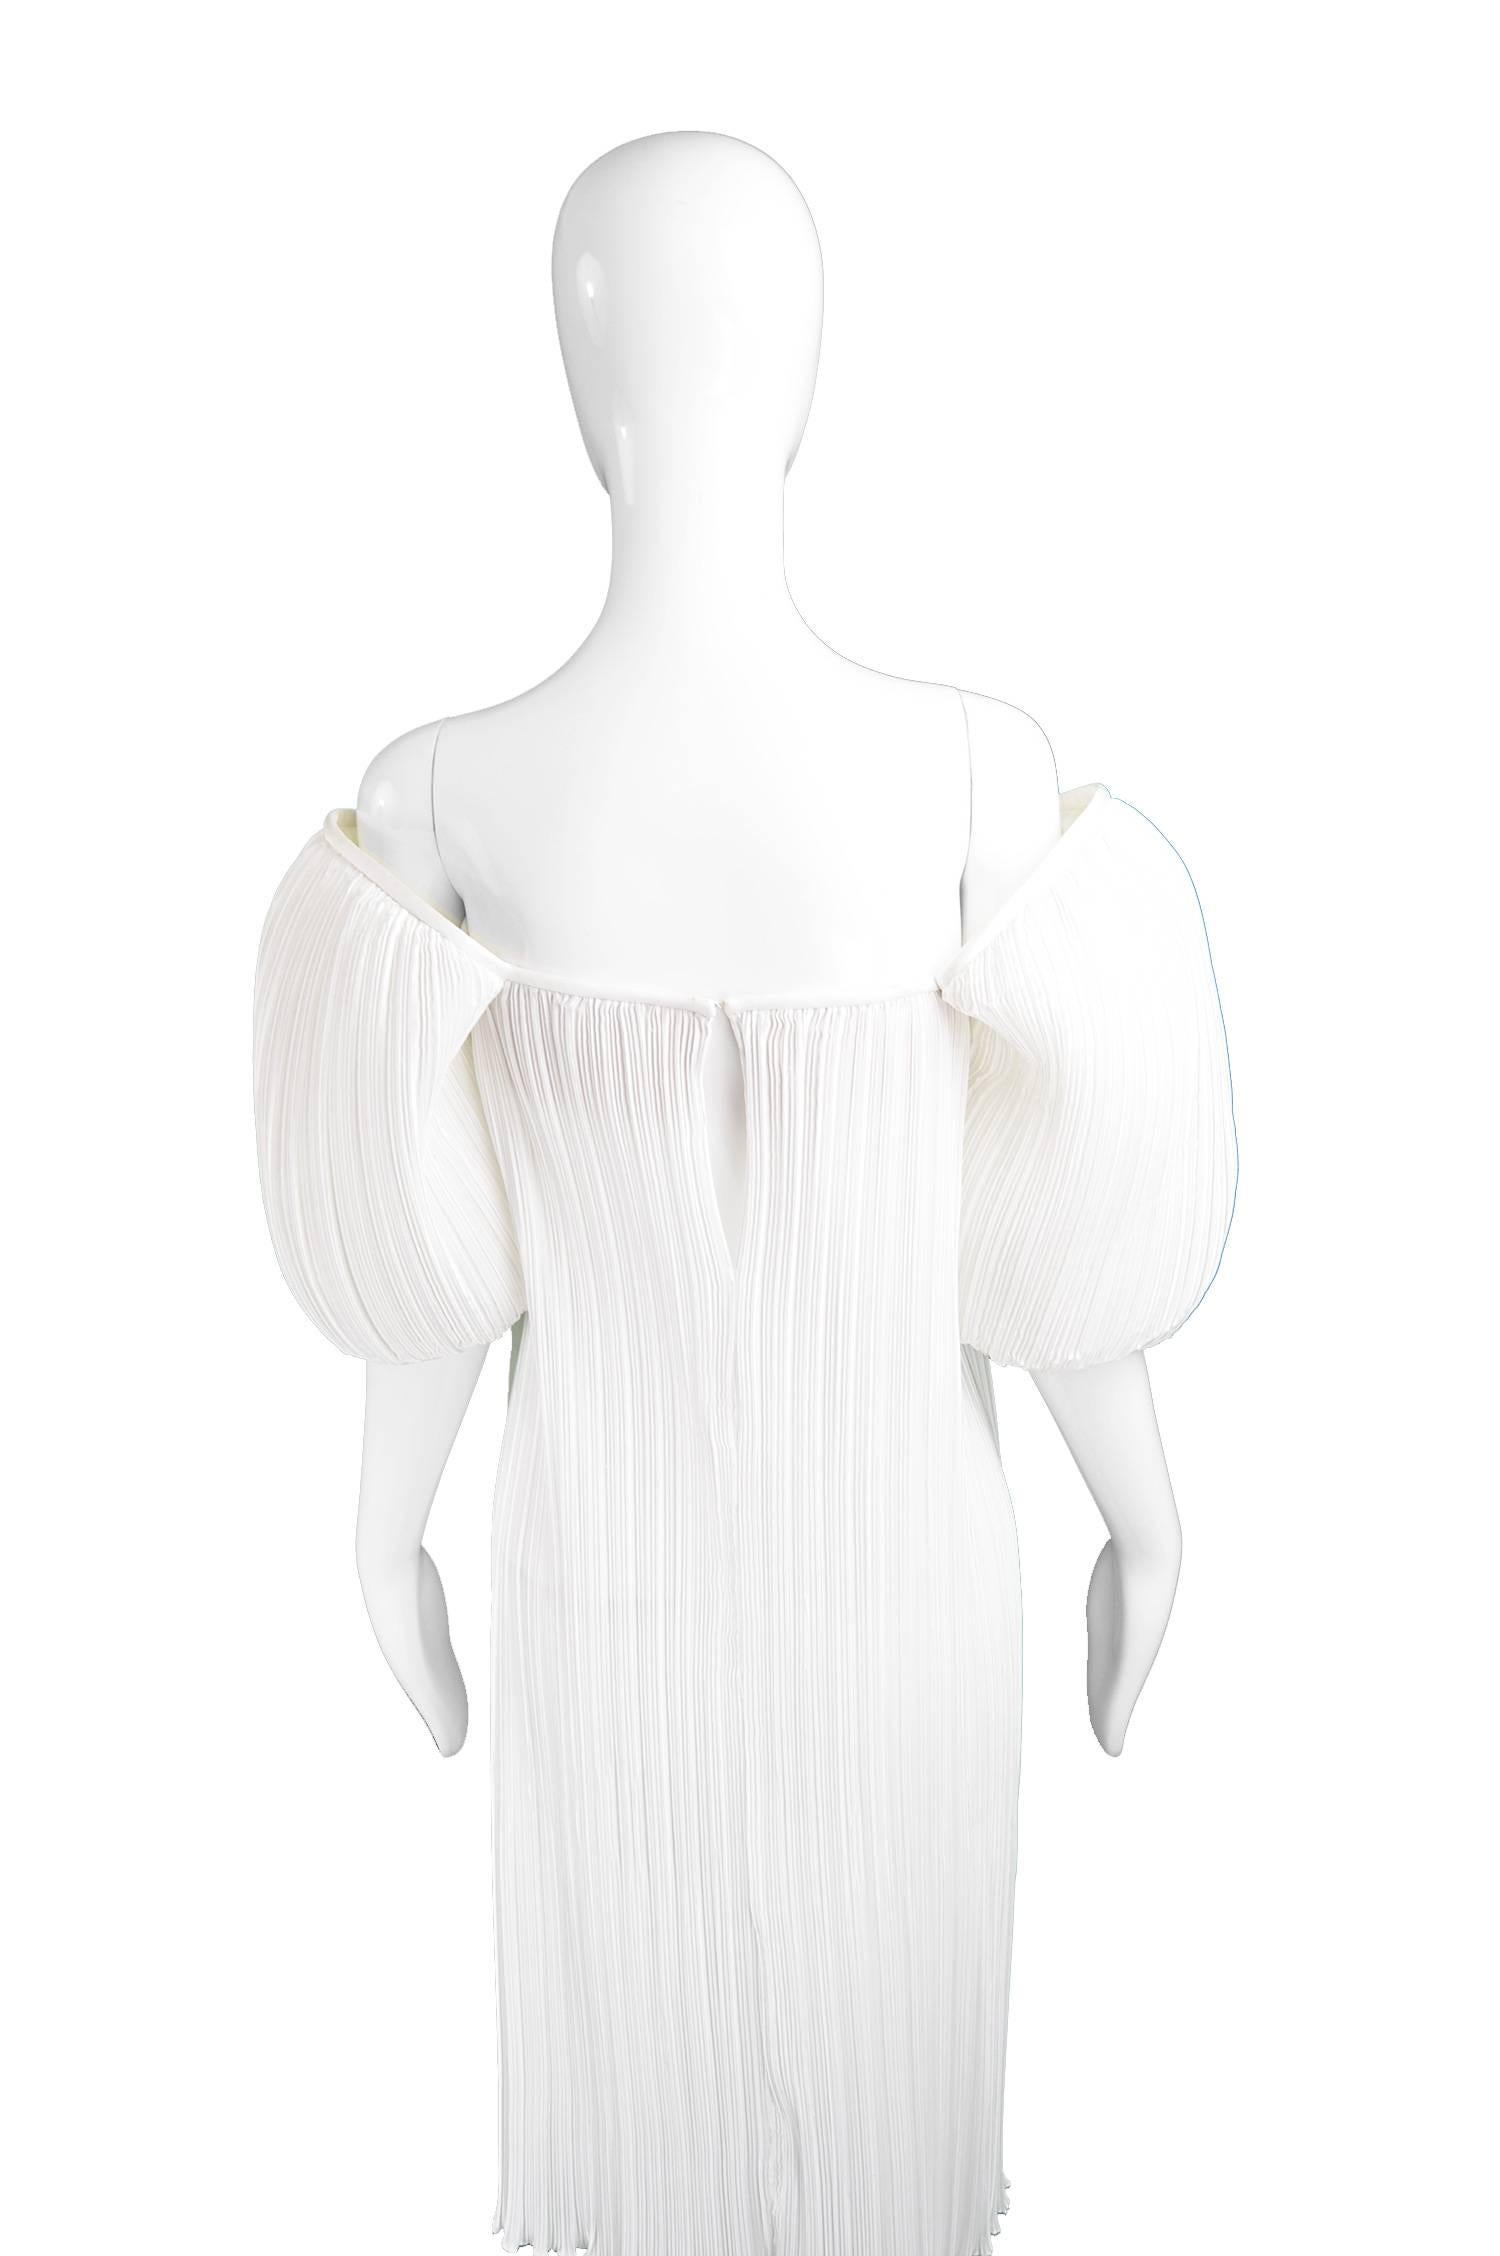 S.G. Gilbert for I. Magnin Ethereal White Vintage Fortuny Pleat Dress, 1980s 2